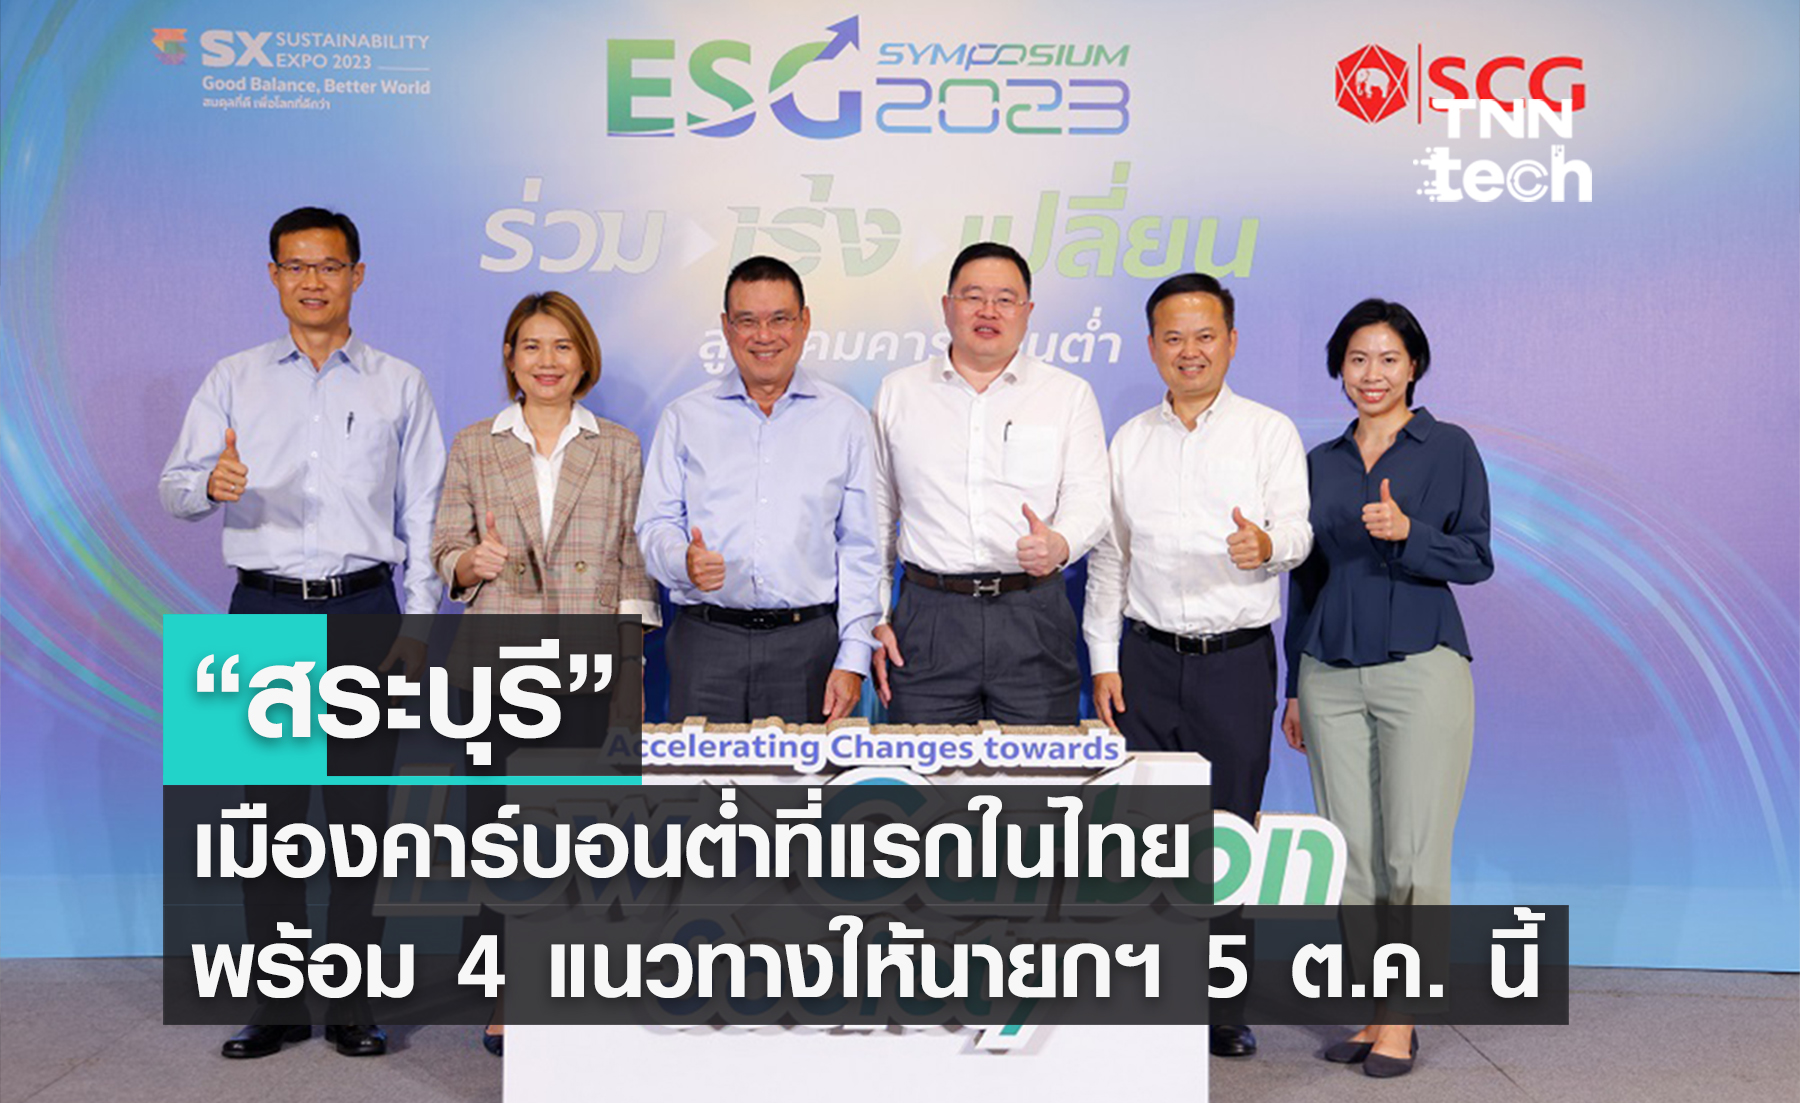 SCG-รัฐ-ประชาสังคม ยก “สระบุรี” ต้นแบบ “เมืองคาร์บอนต่ำ”​ แห่งแรกของไทย พร้อมเสนอ 4 แนวทางคาร์บอนต่ำให้นายกฯ 5 ตุลาคมนี้